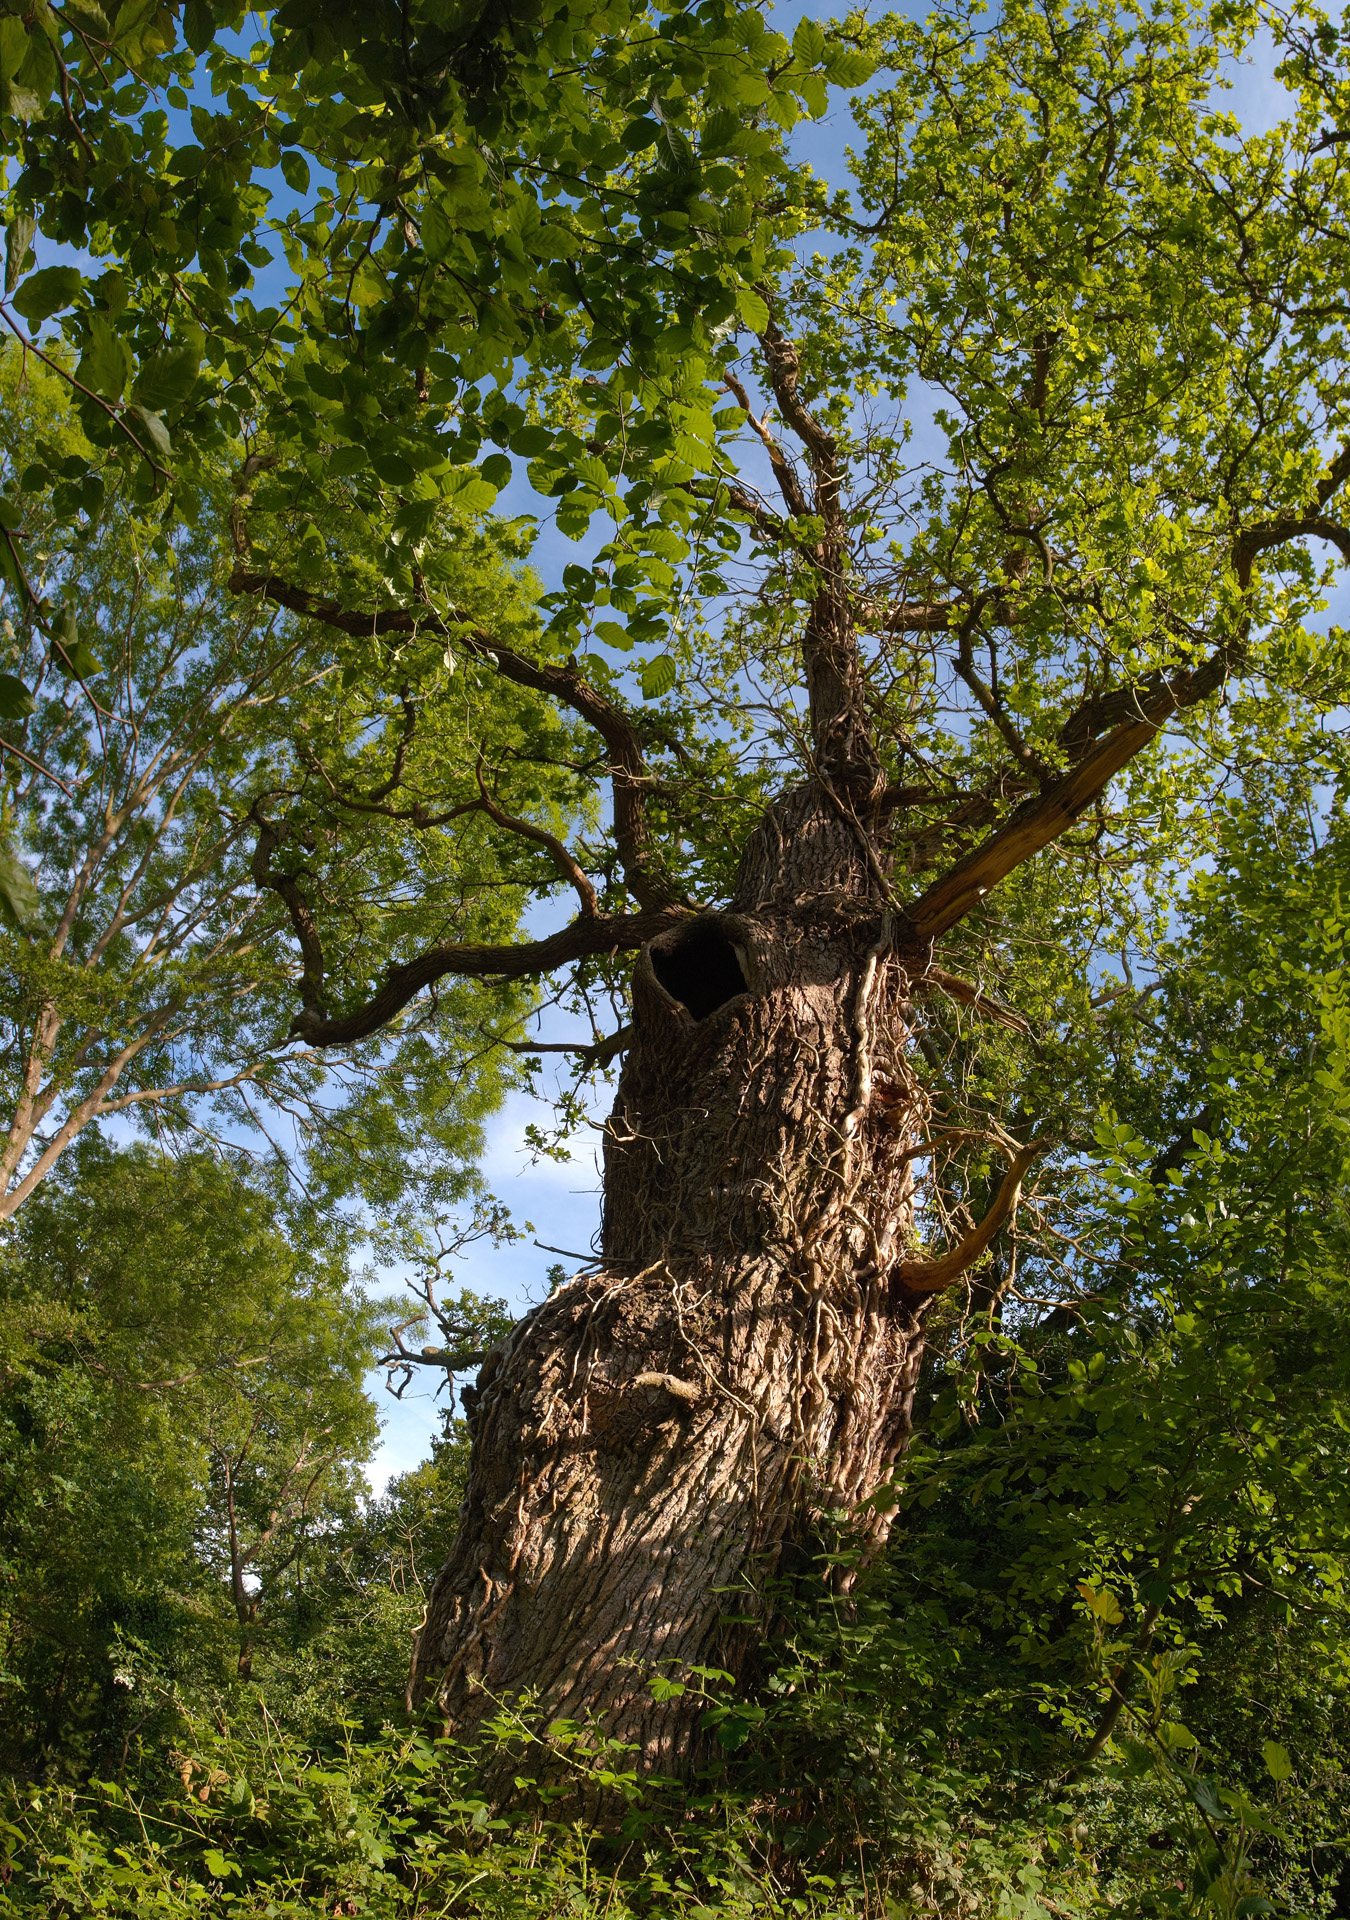 Gnarled old Oak tree at Burnham Beeches ancient woodland